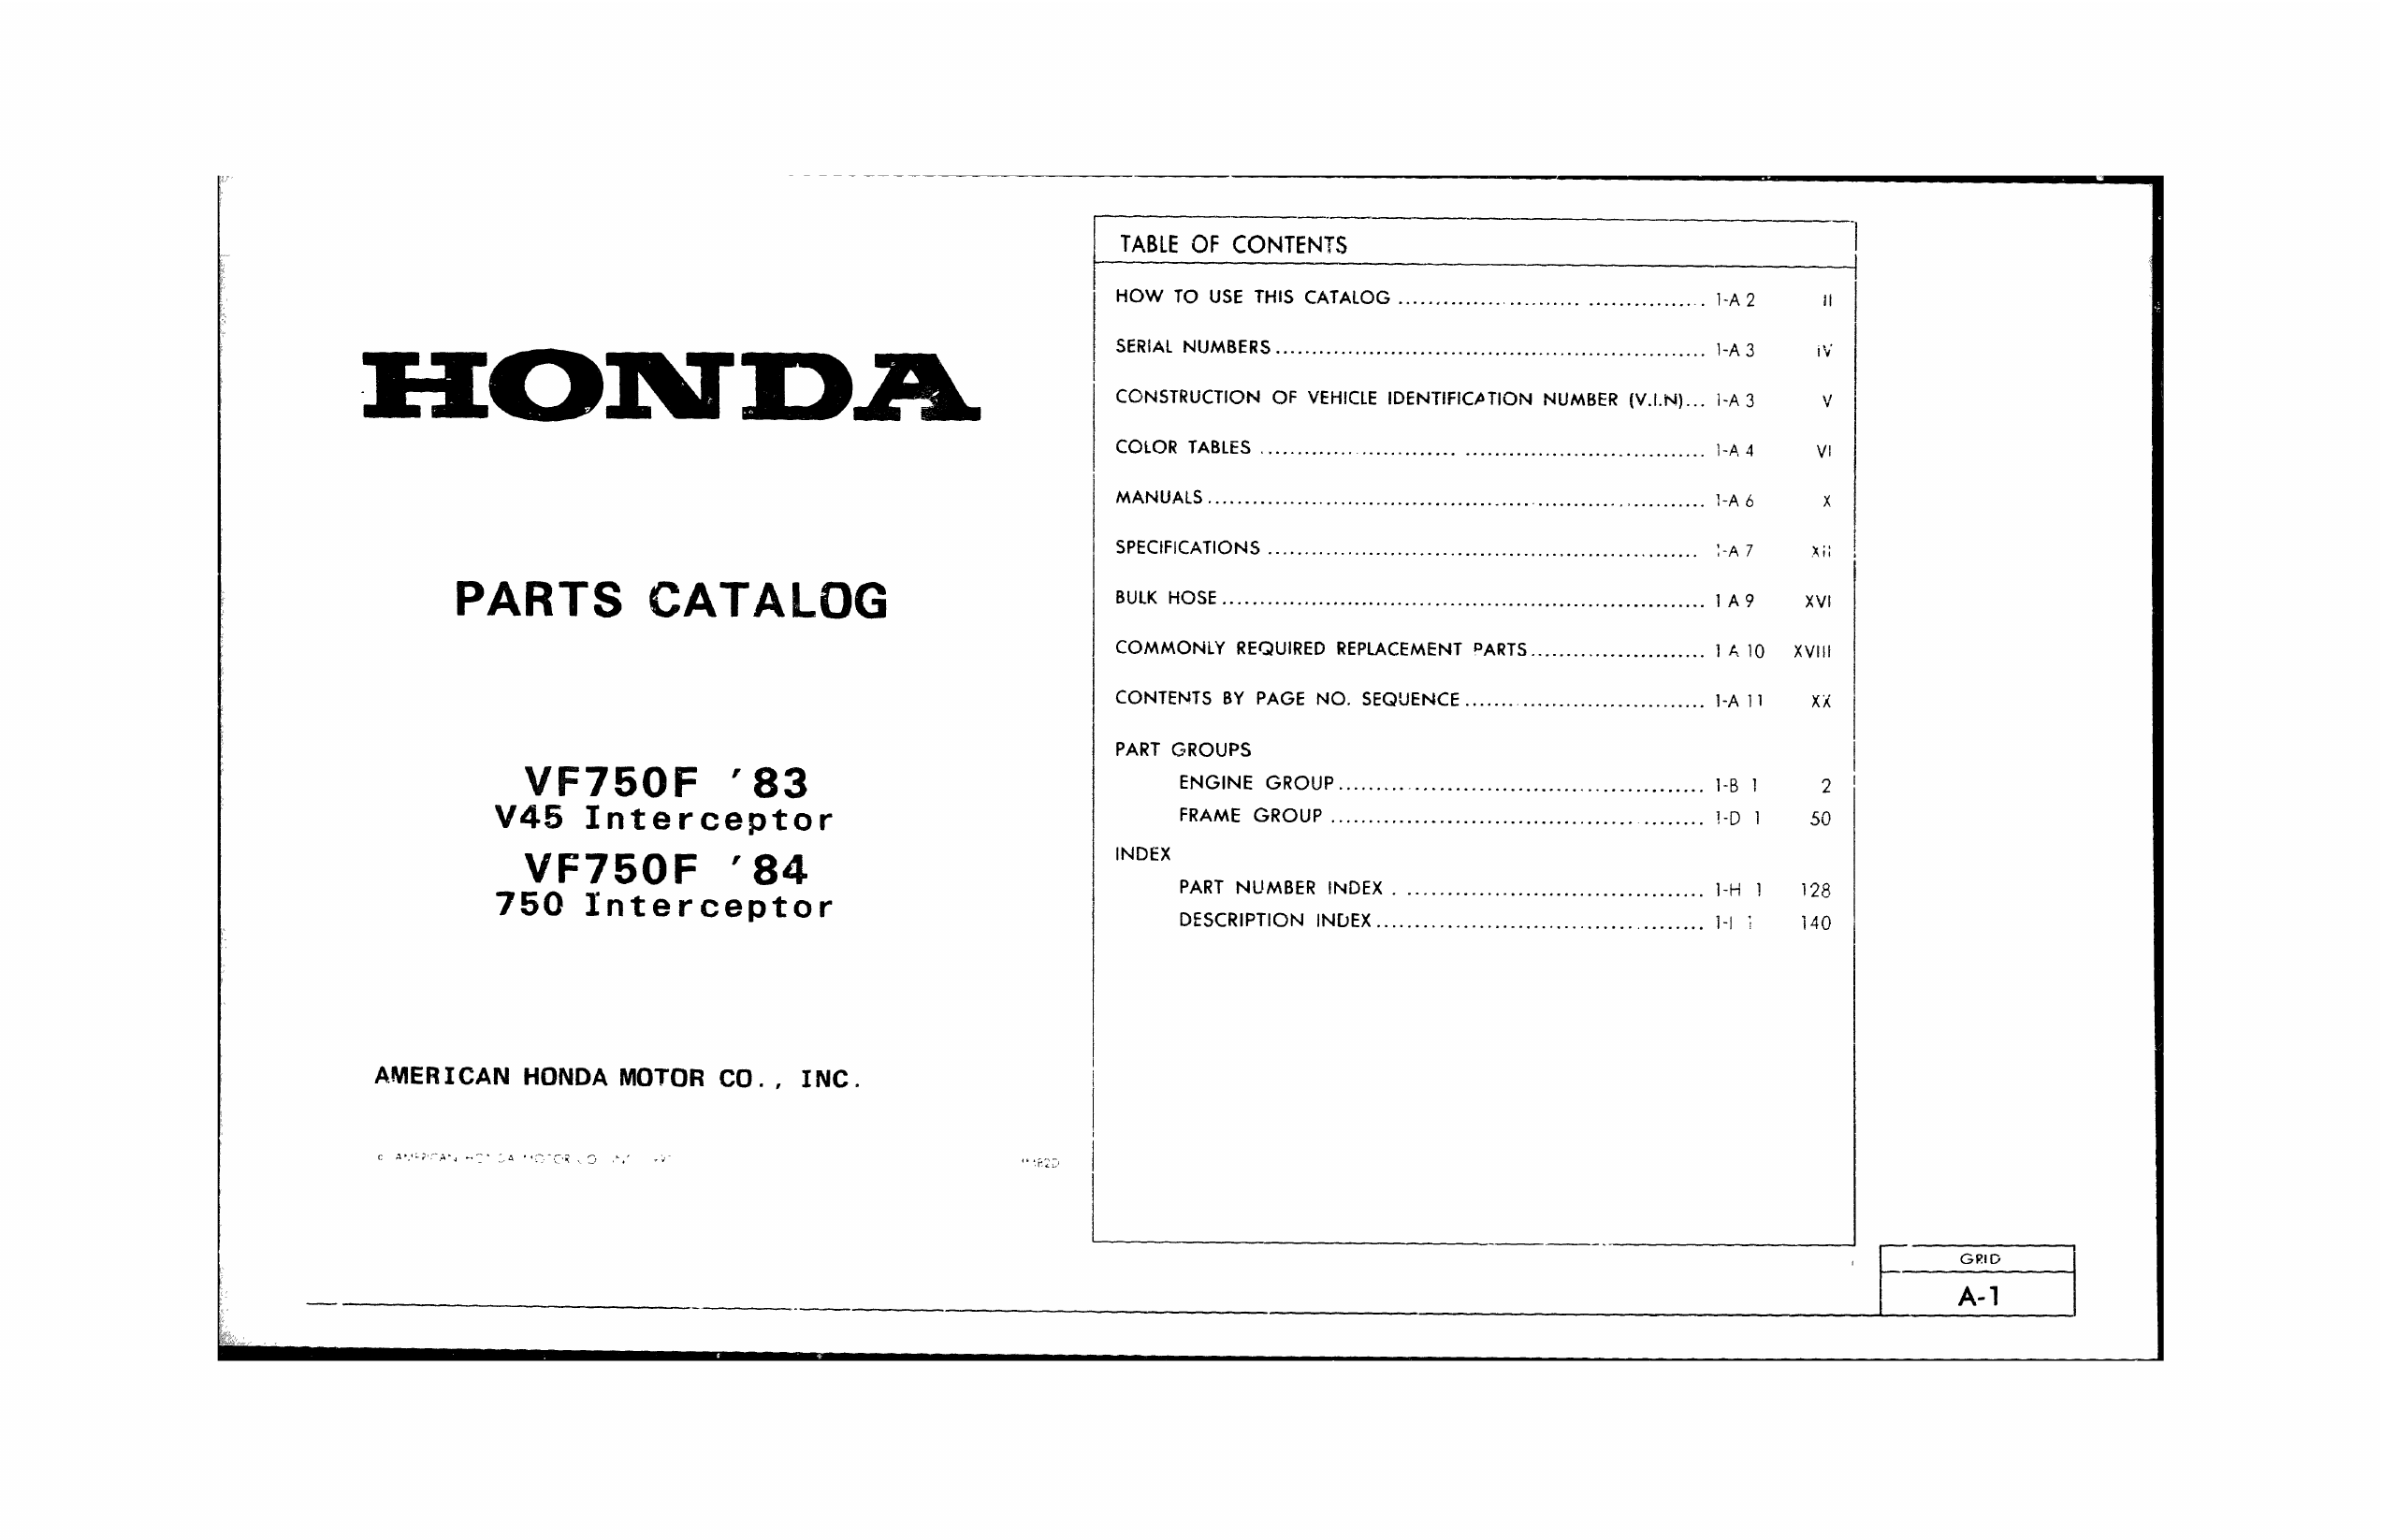 1983-1986 Honda Interceptor VF750F parts catalog Preview image 2